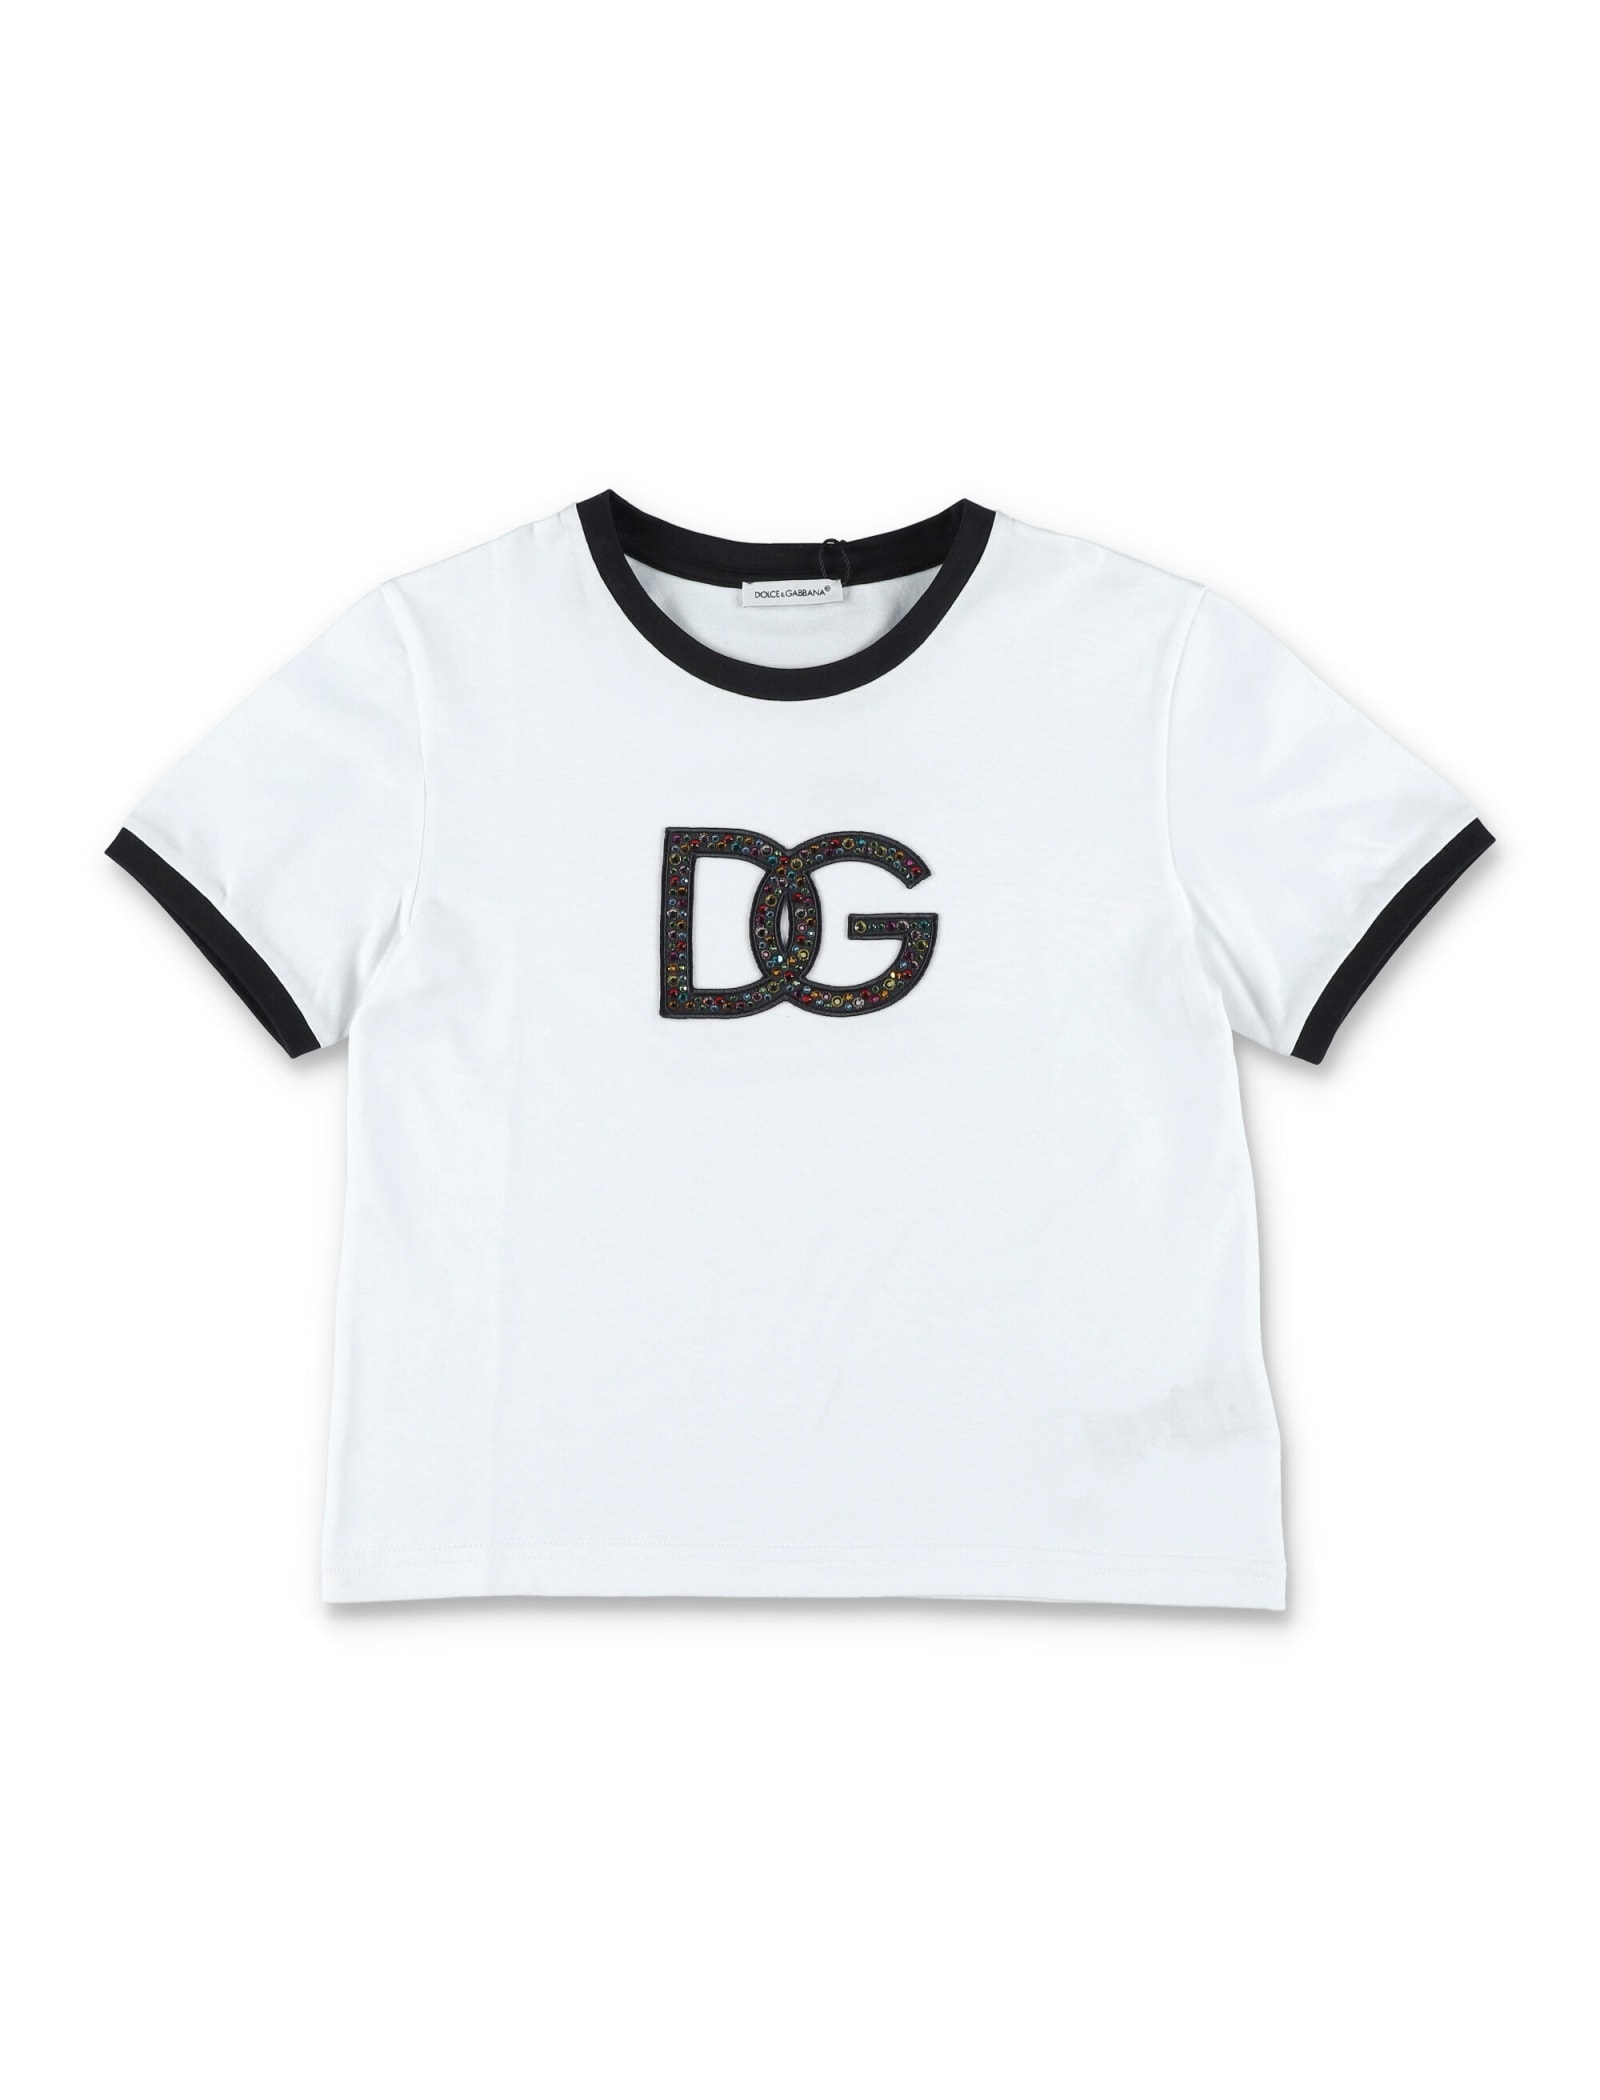 Dolce & Gabbana Light Therapy T-shirt